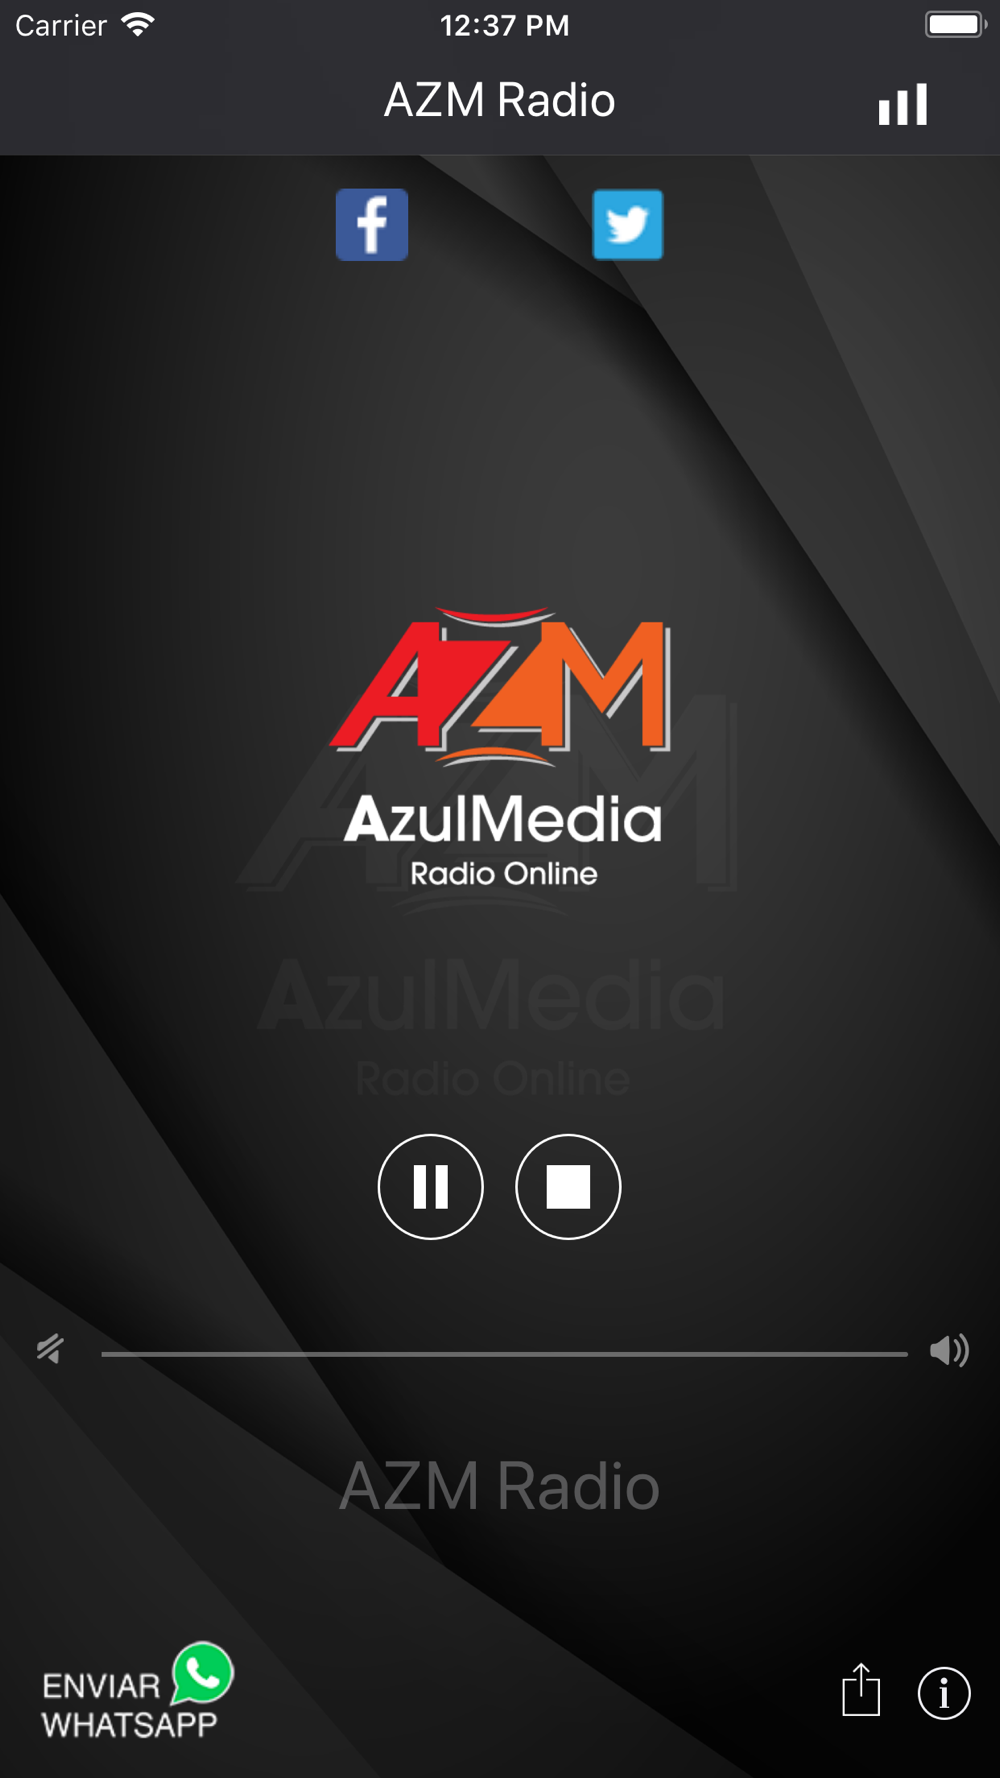 AZM Radio Free Download App for iPhone - STEPrimo.com